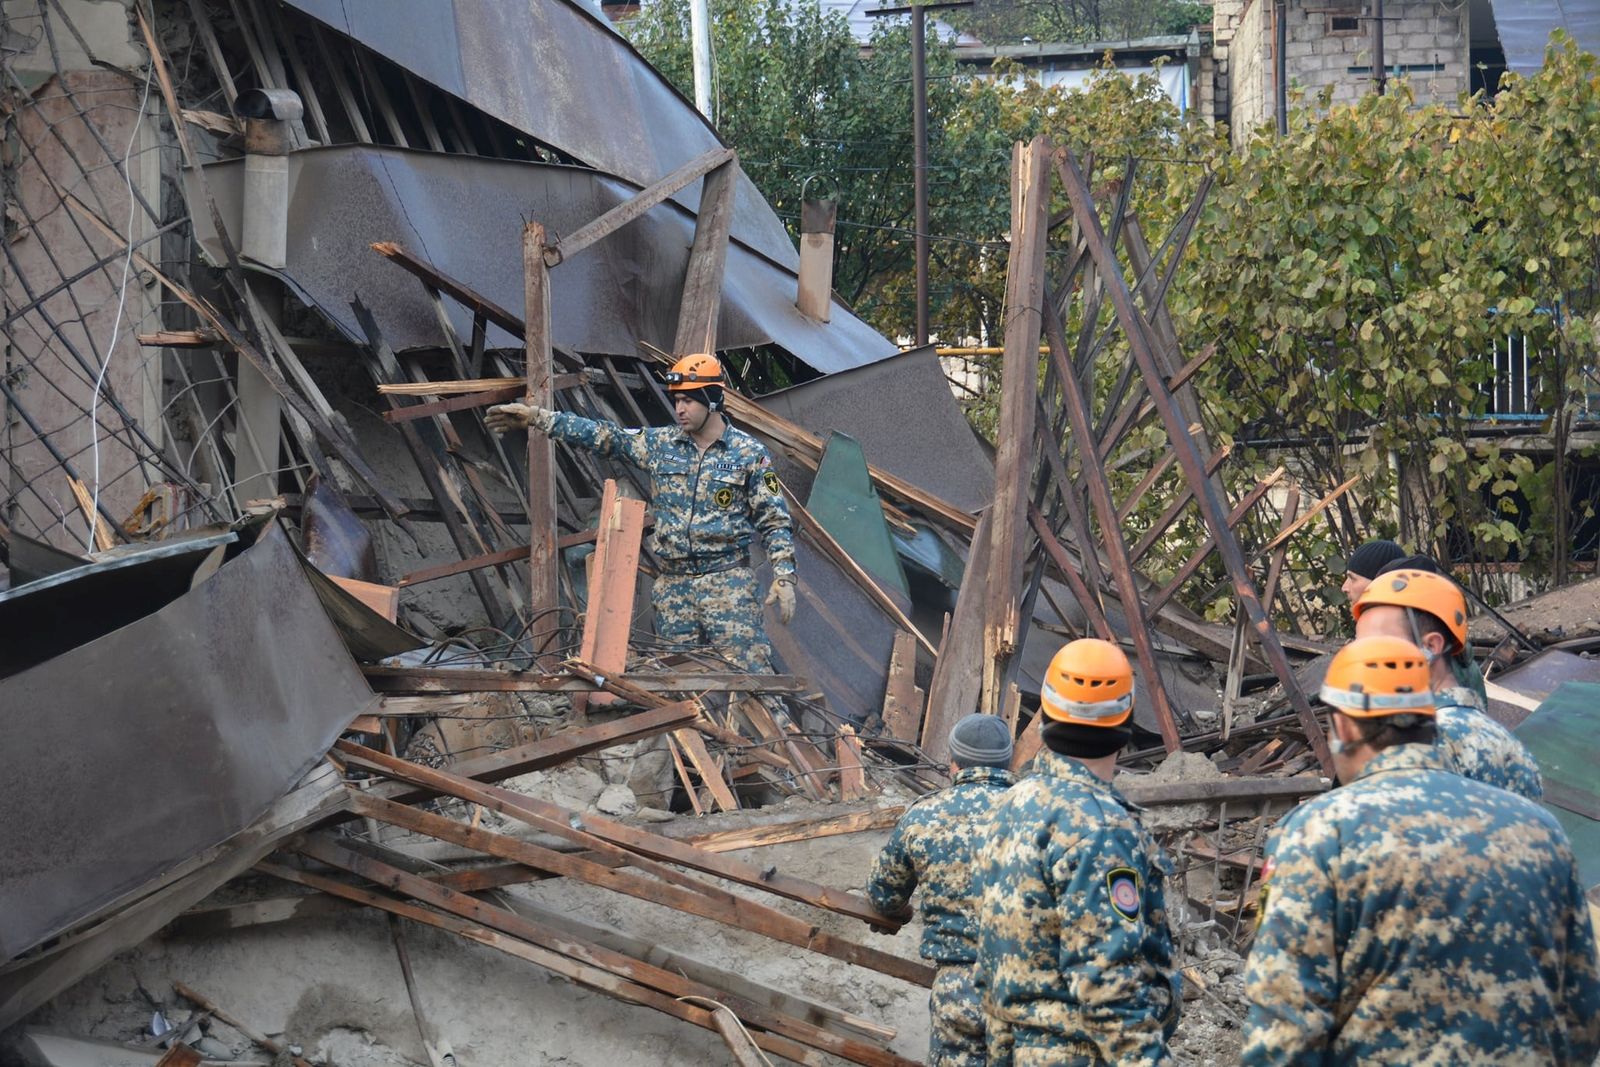 دمار بعد قصف على ستيباناكيرت، عاصمة ناجورنو قره باغ - 6 نوفمبر 2020 - REUTERS